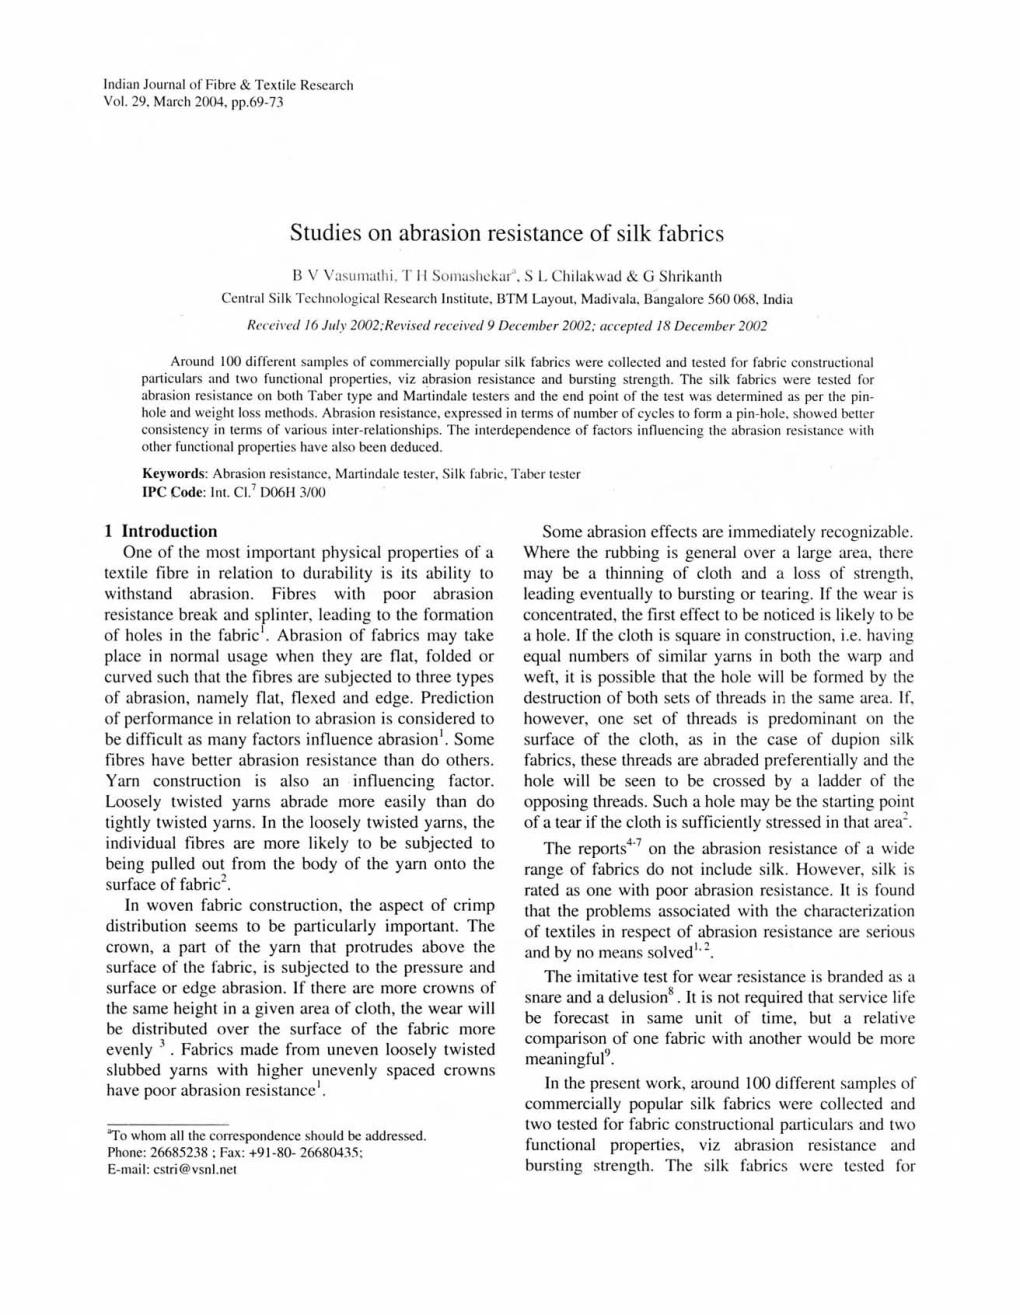 Studies on Abrasion Resistance of Silk Fabrics